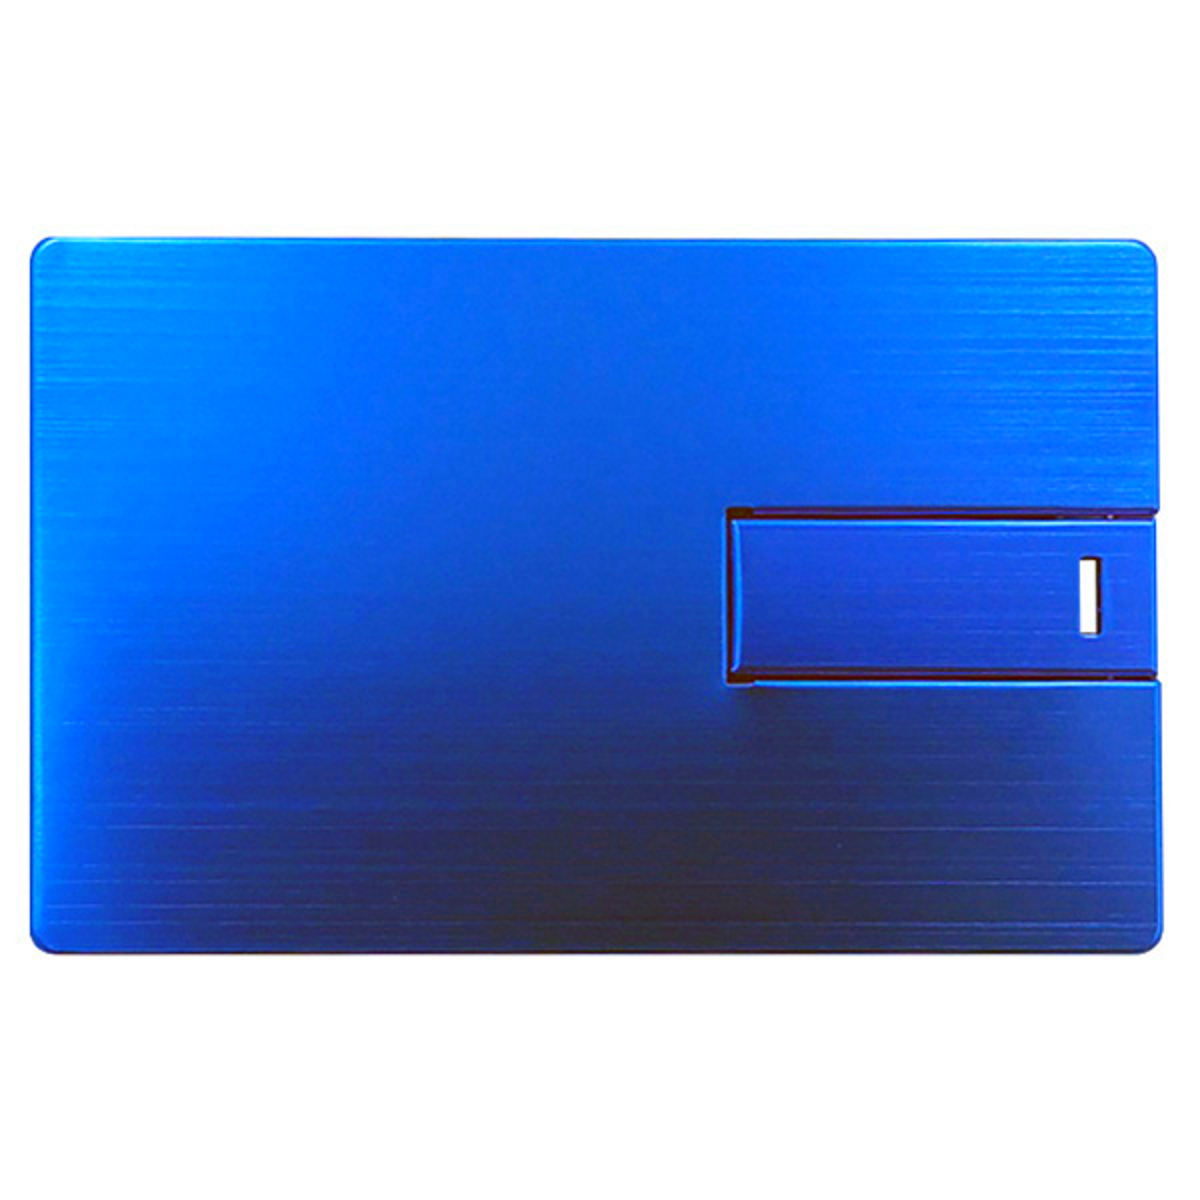 USB GERMANY ® 1 GB) USB-Stick (Blau, Metall-Kreditkarte